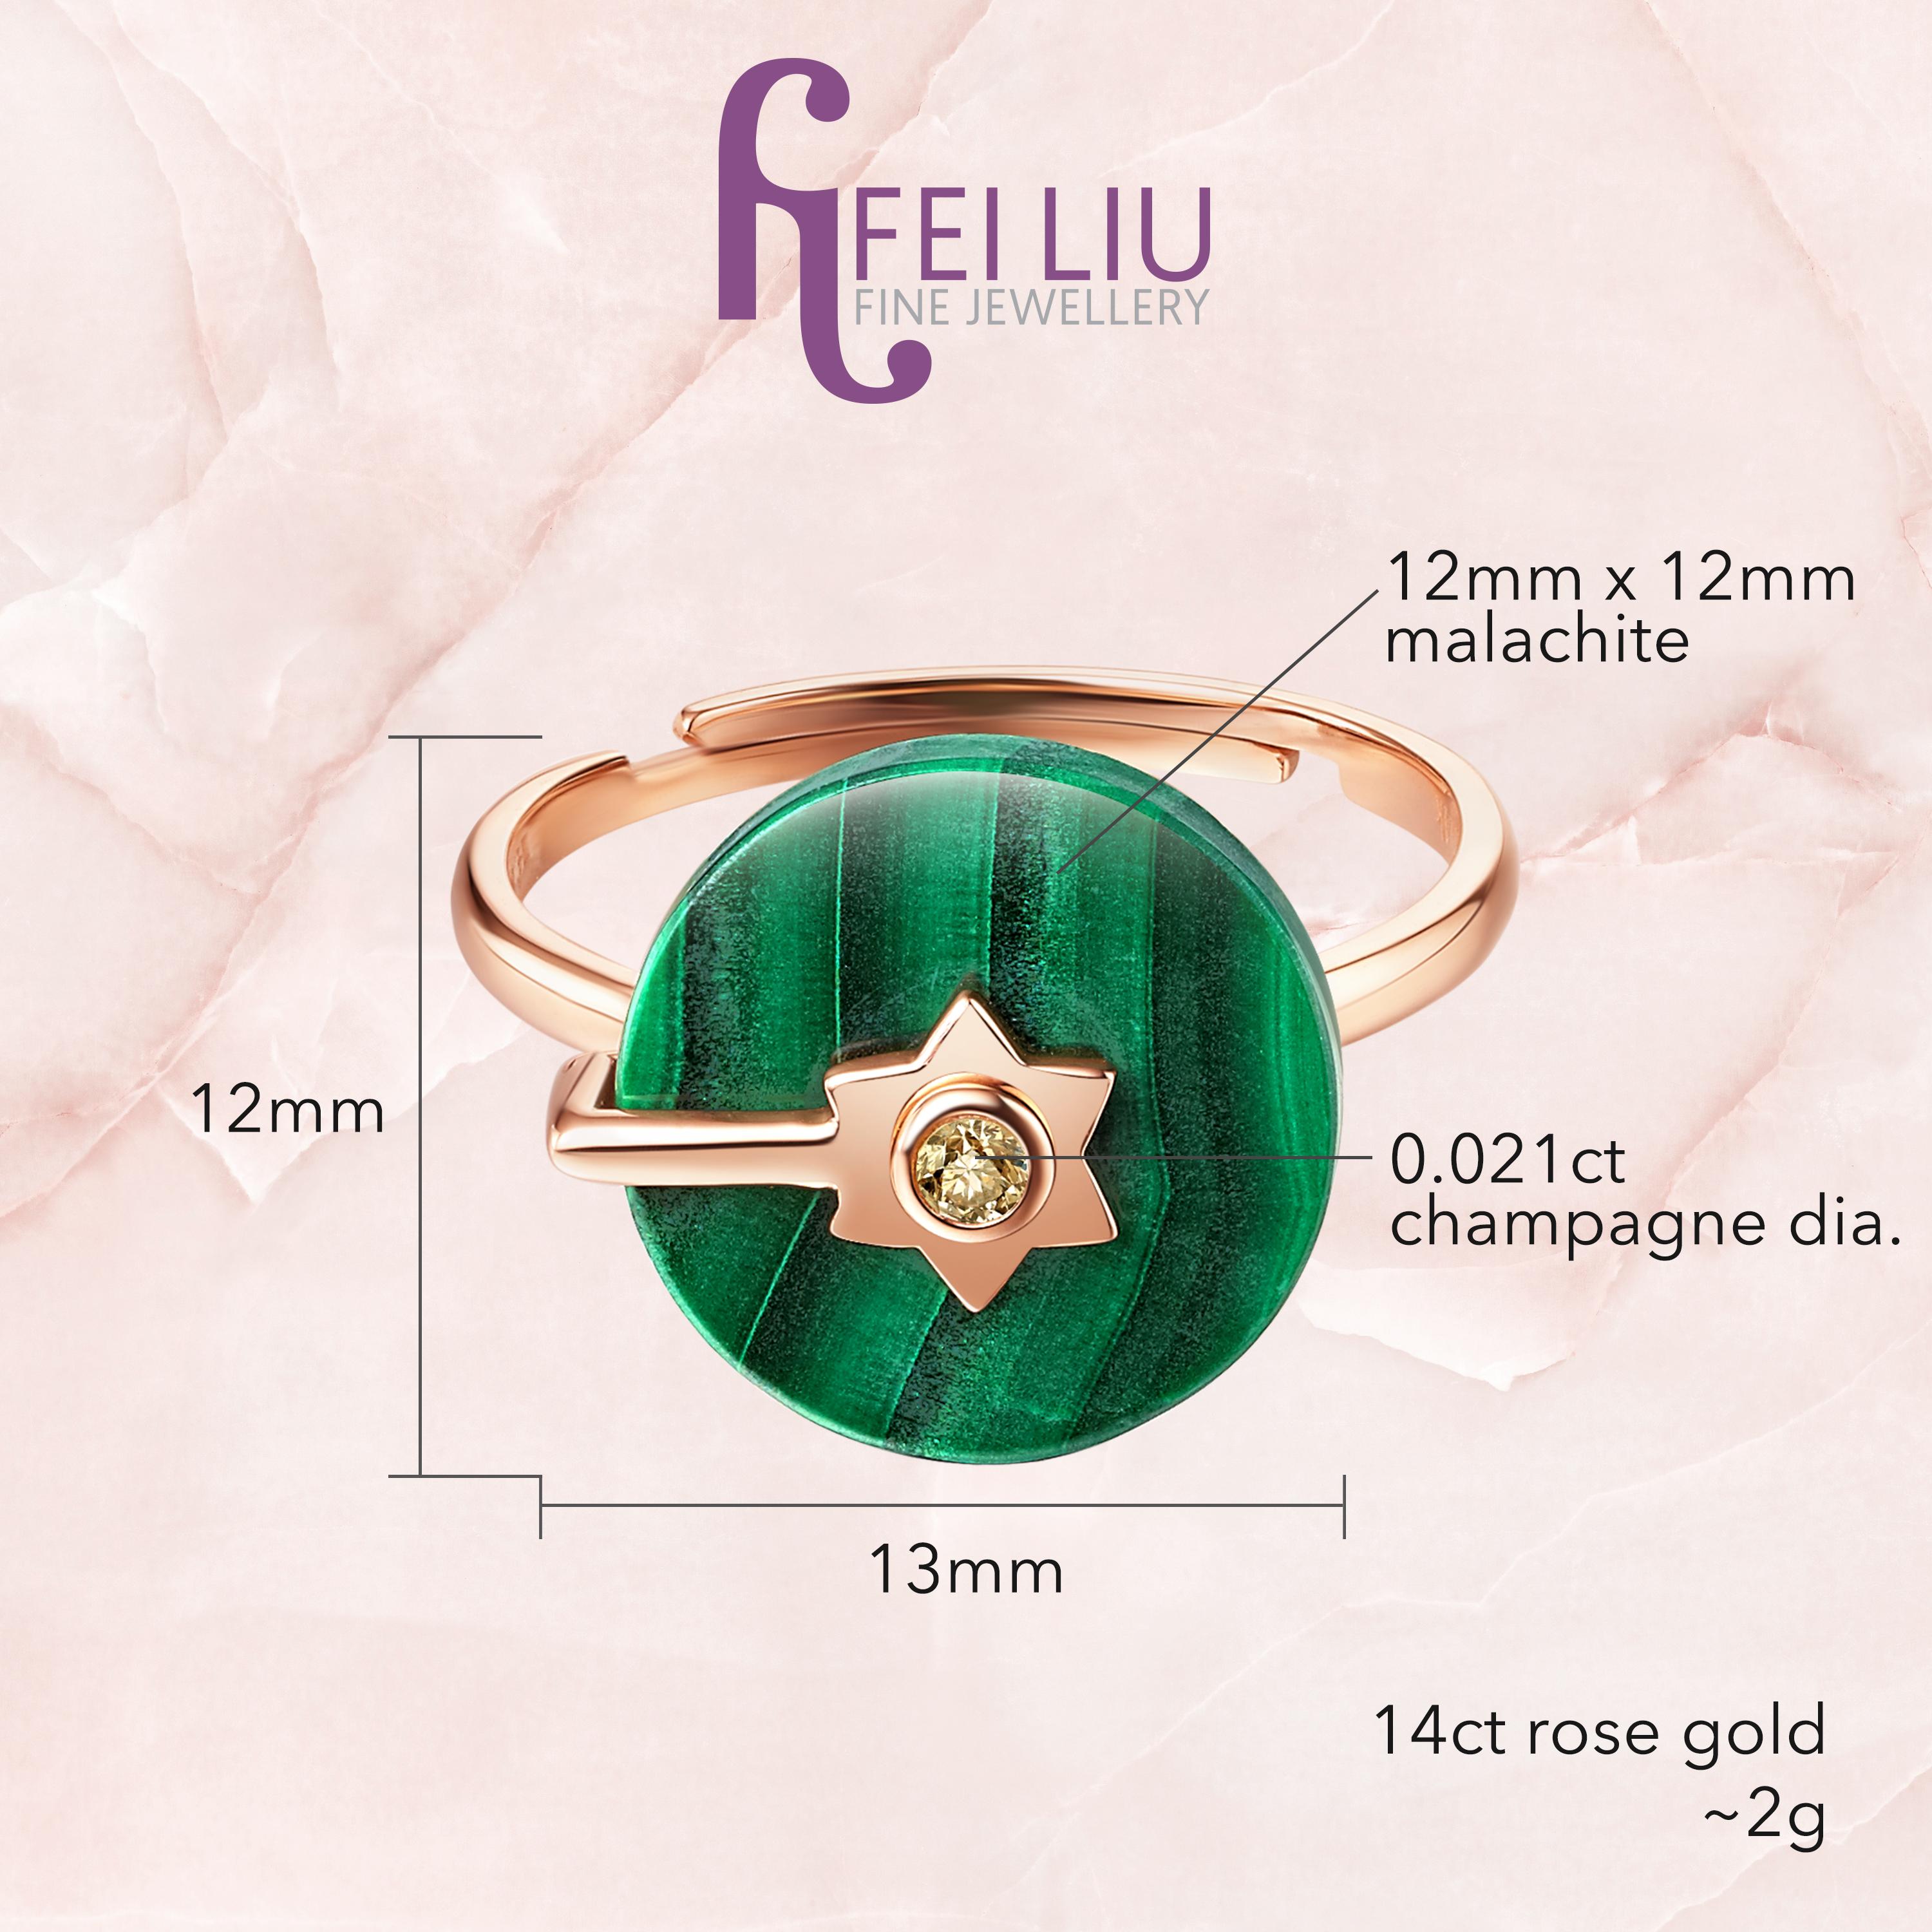 Fei Liu Malachite Diamond Rose Gold Necklace Earrings Ring 2